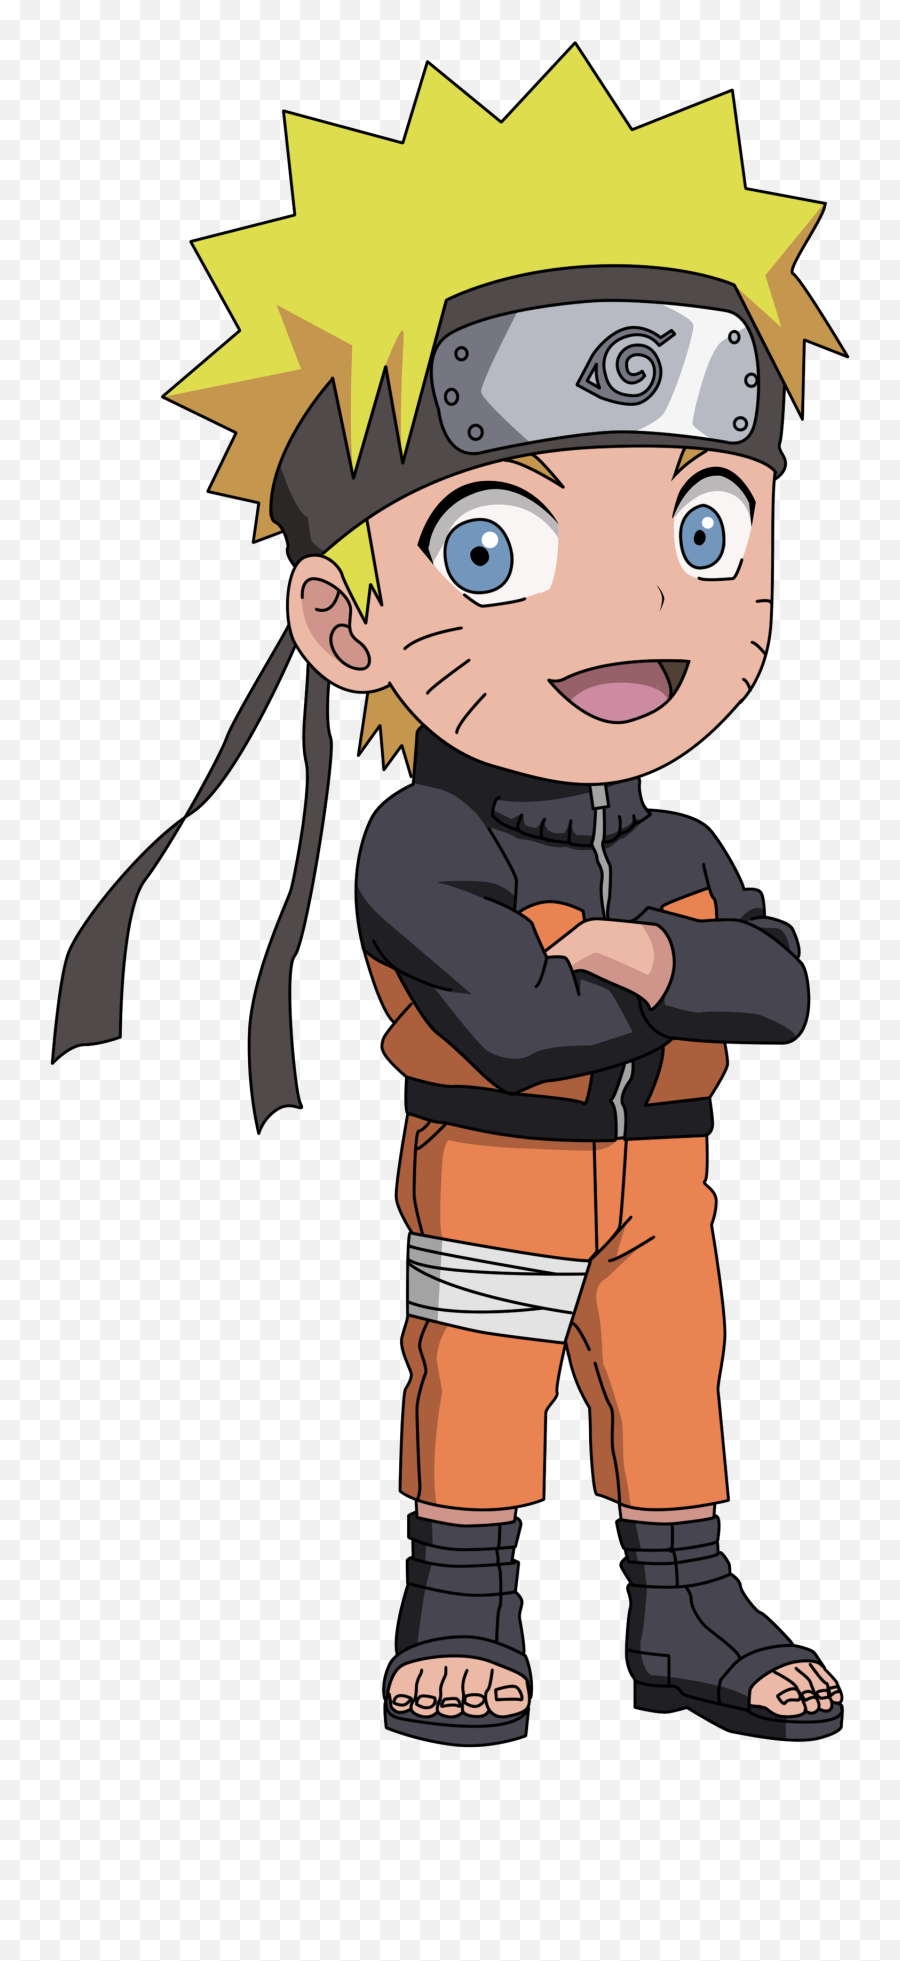 Chibi Sasuke Sasuke from Naruto chibi anime character transparent  background PNG clipart  HiClipart